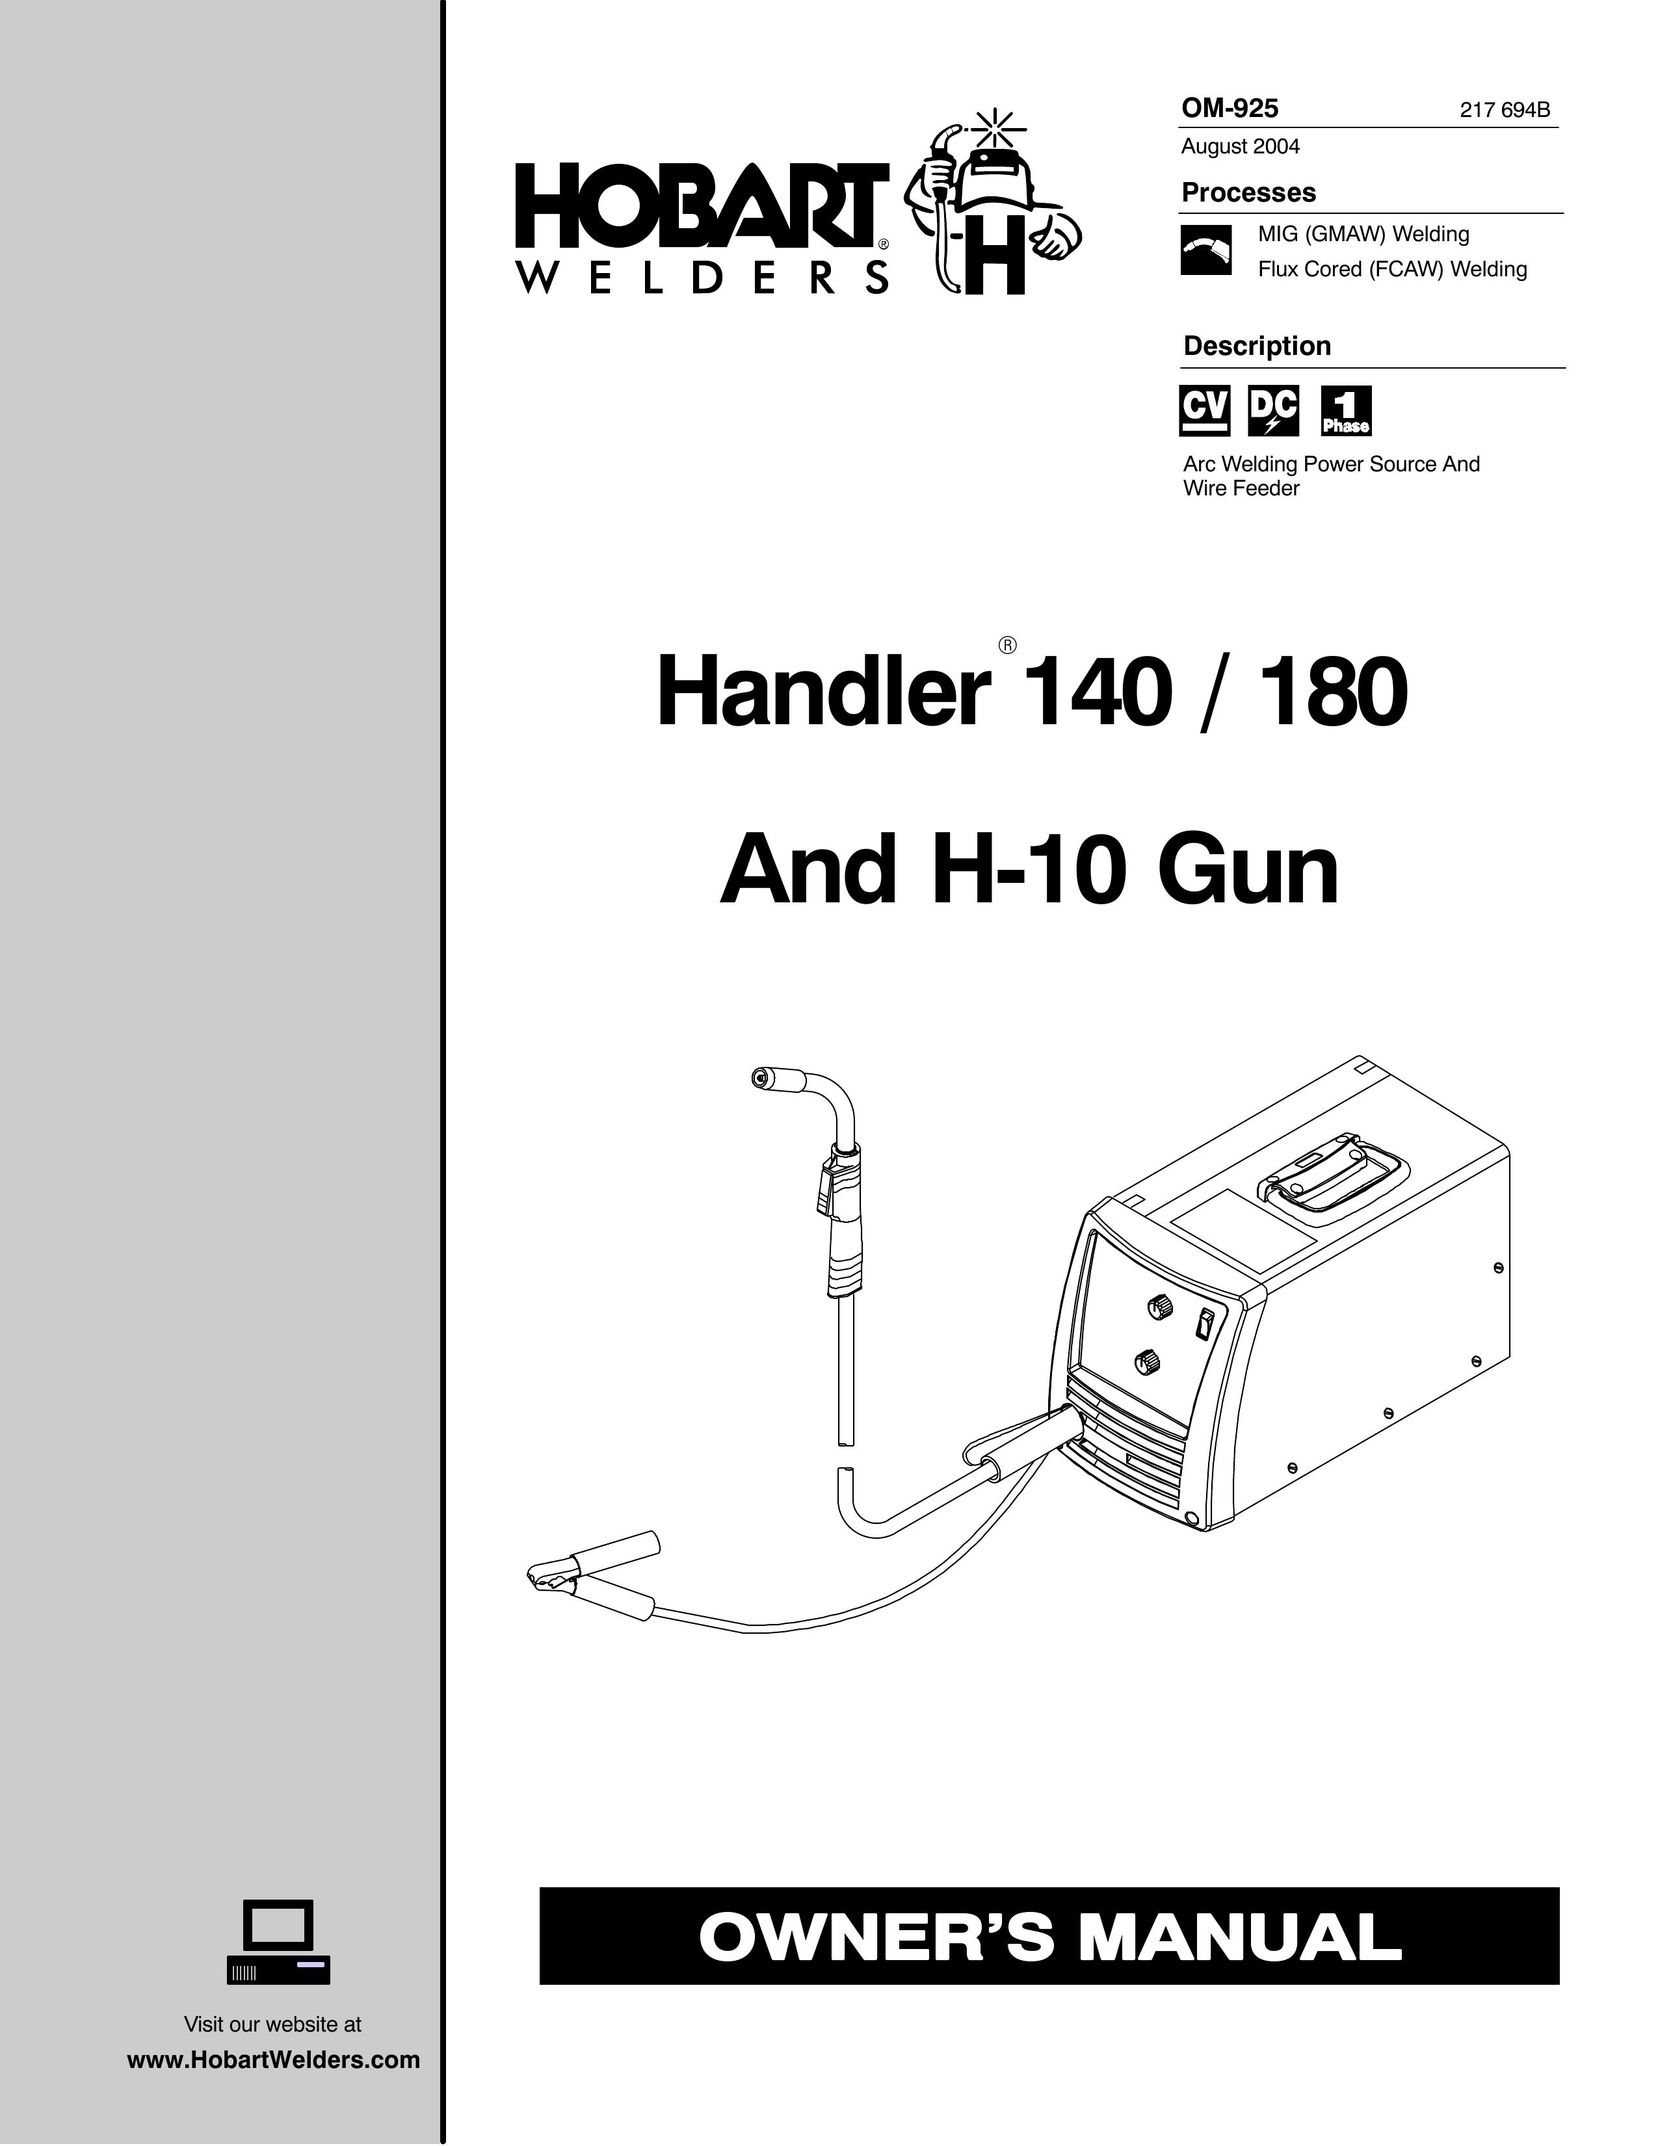 Hobart Welding Products H-10 GUN Welder User Manual